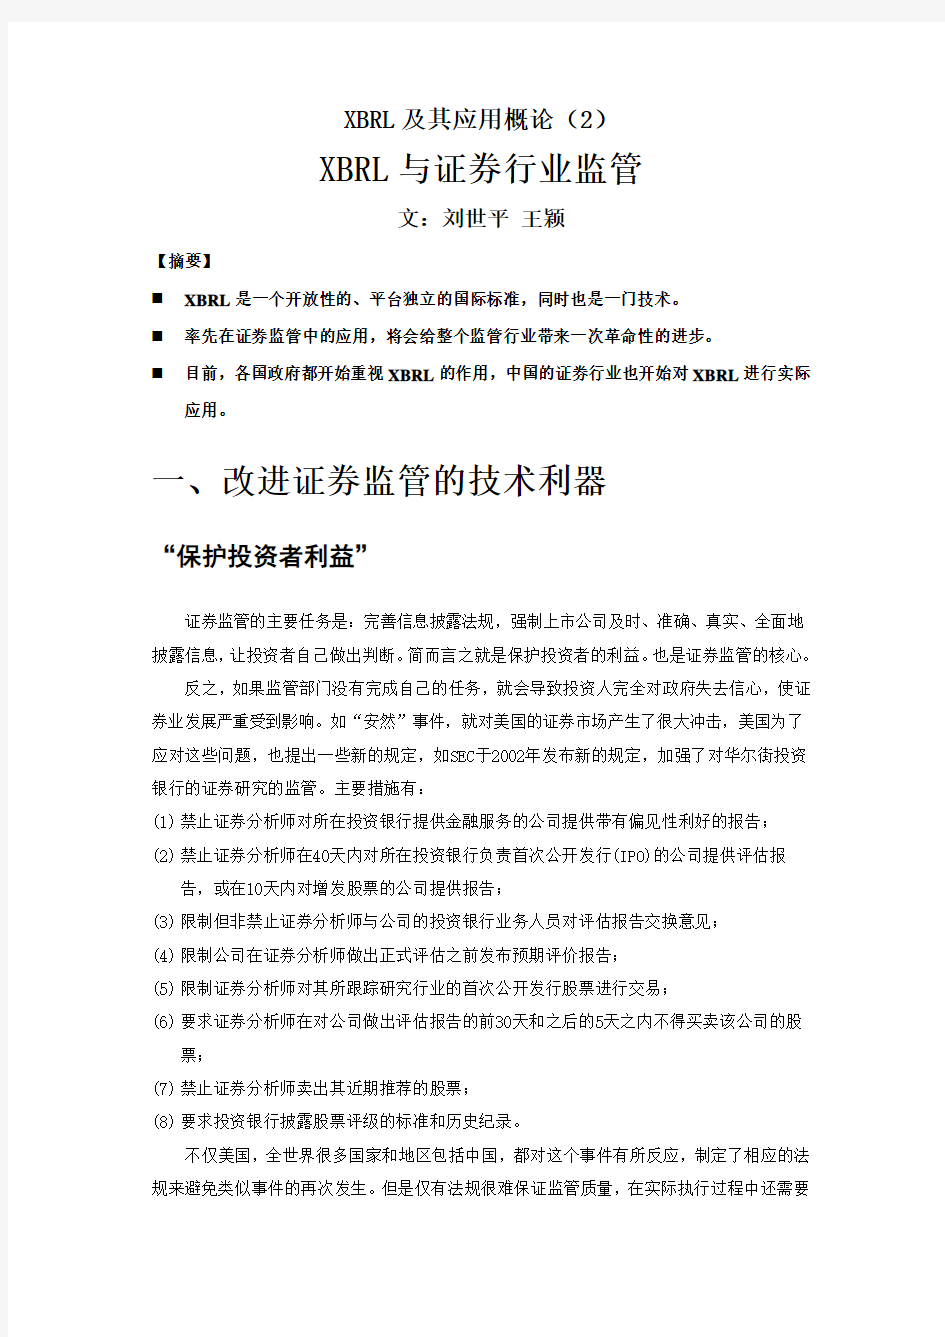 XBRL及其应用概论(2) XBRL与证券行业监管 文：刘世平 王颖